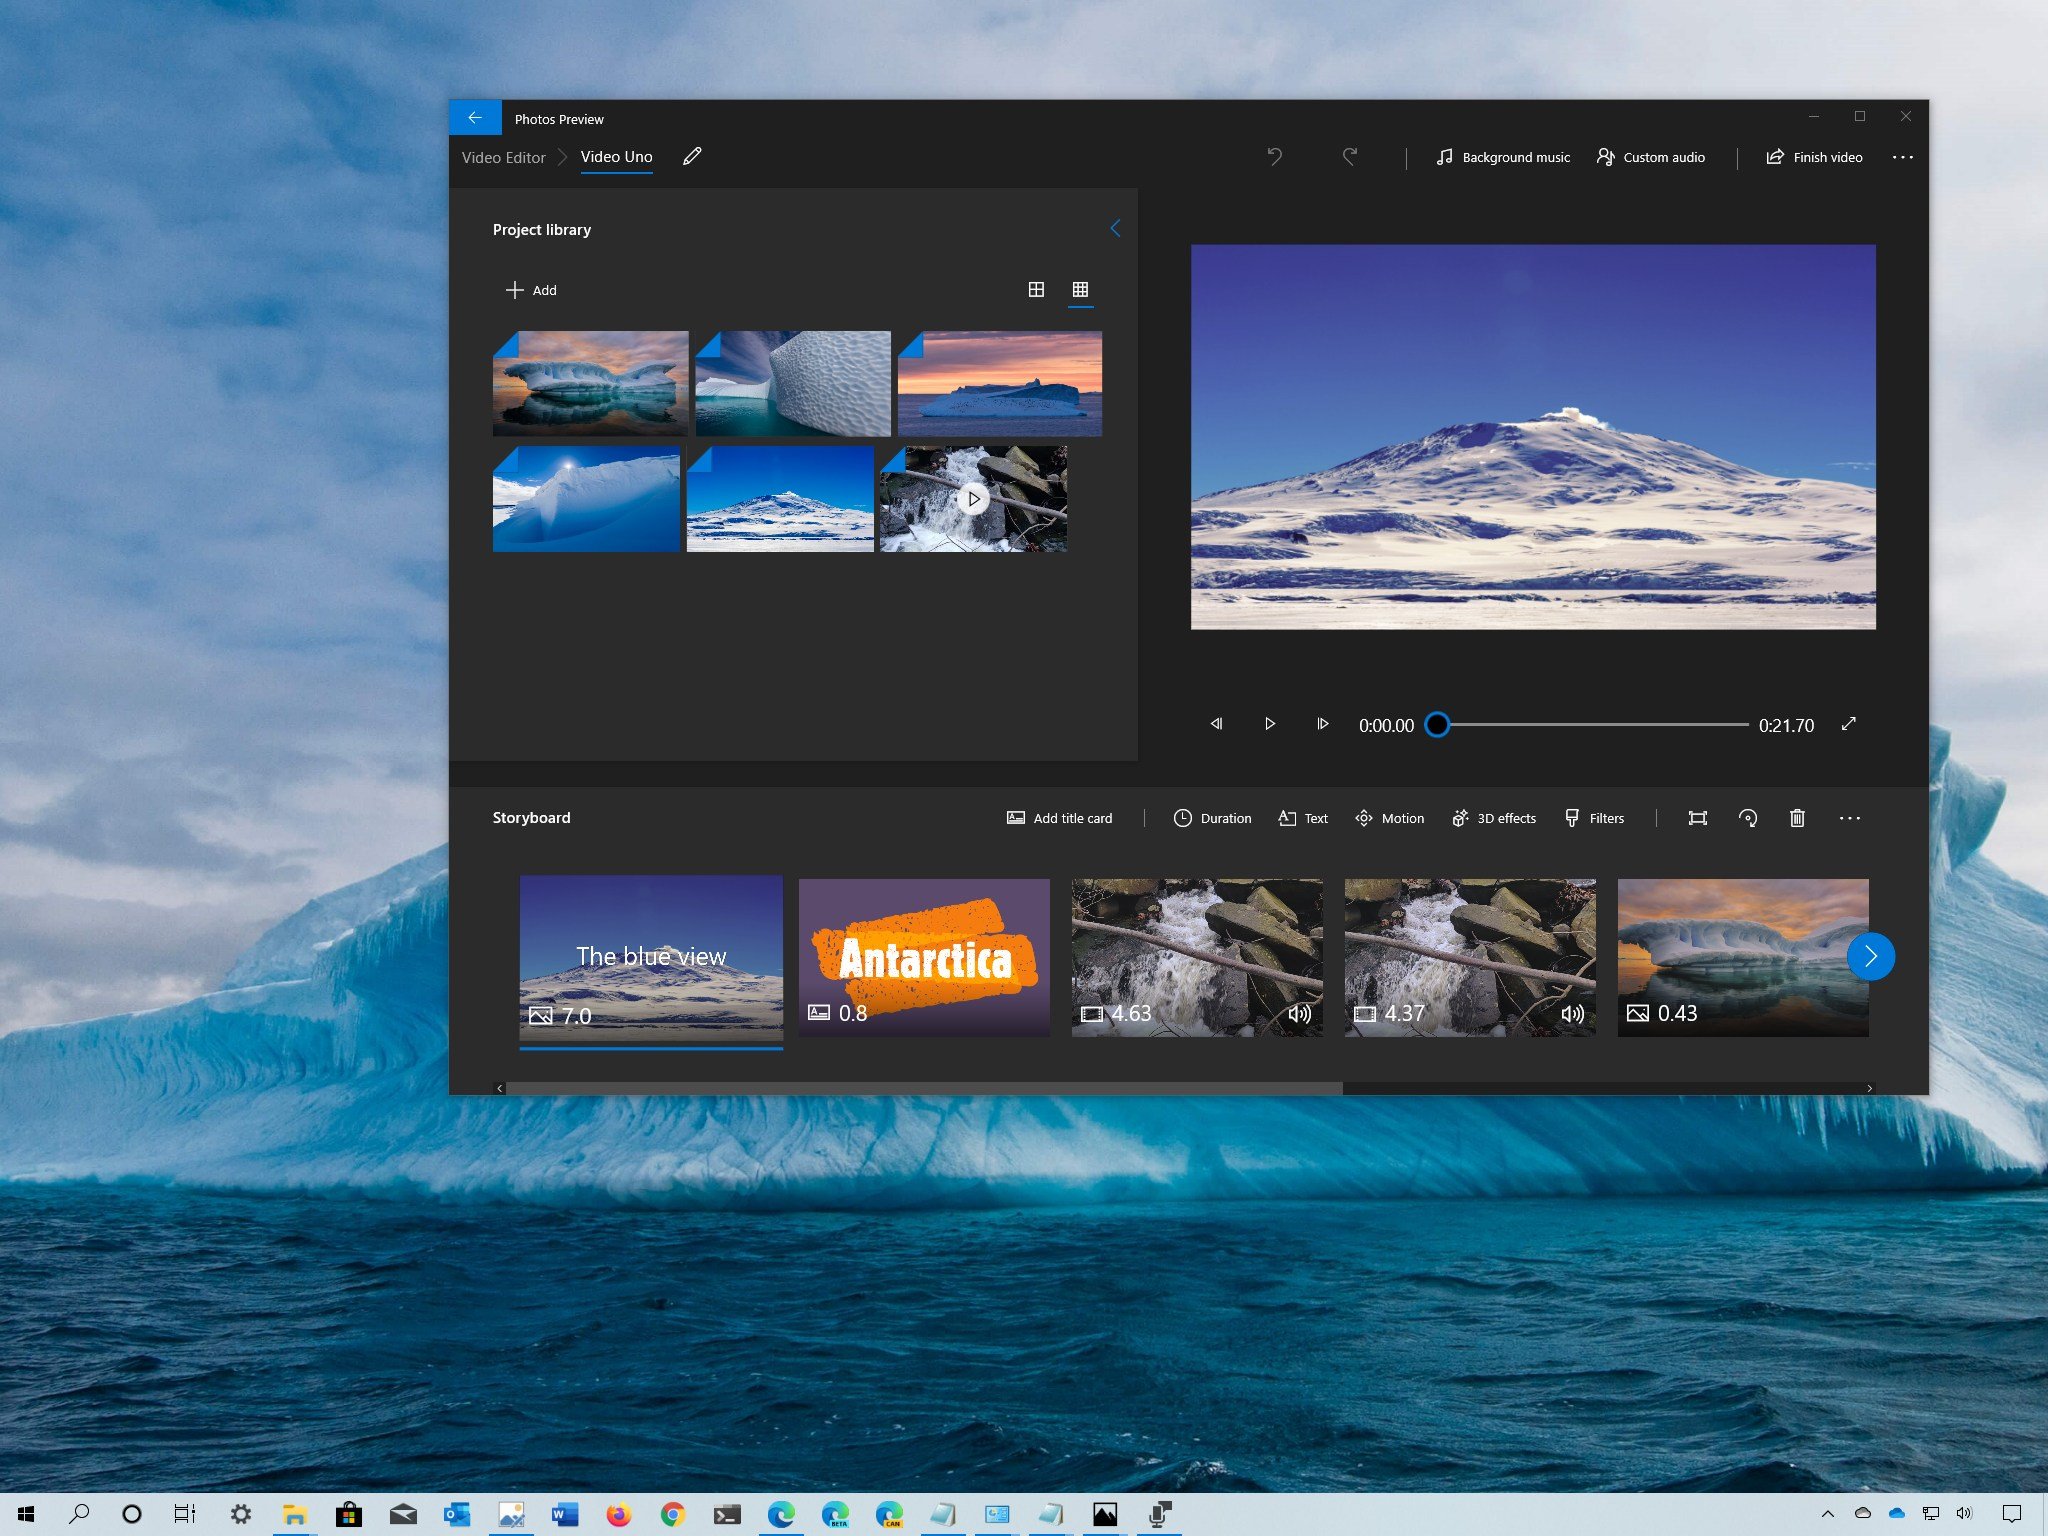 video-editor-windows-10-photos-app.jpg